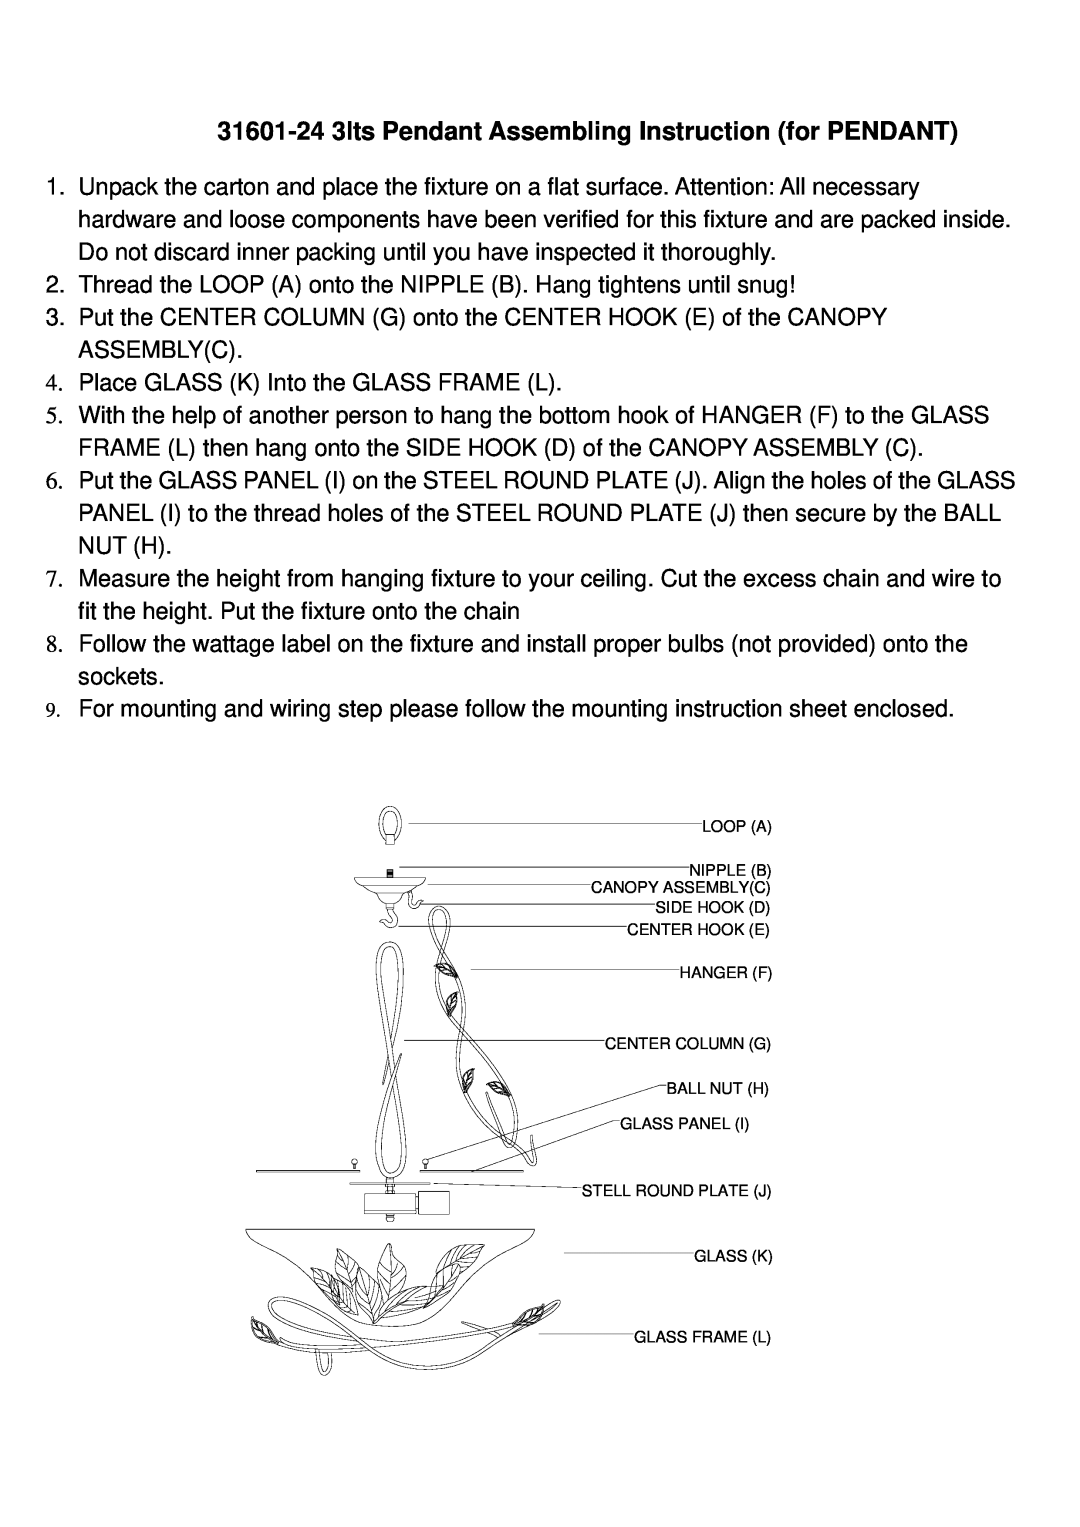 Triarch 31601-24 lts instruction sheet Place GLASS K Into the GLASS FRAME L 